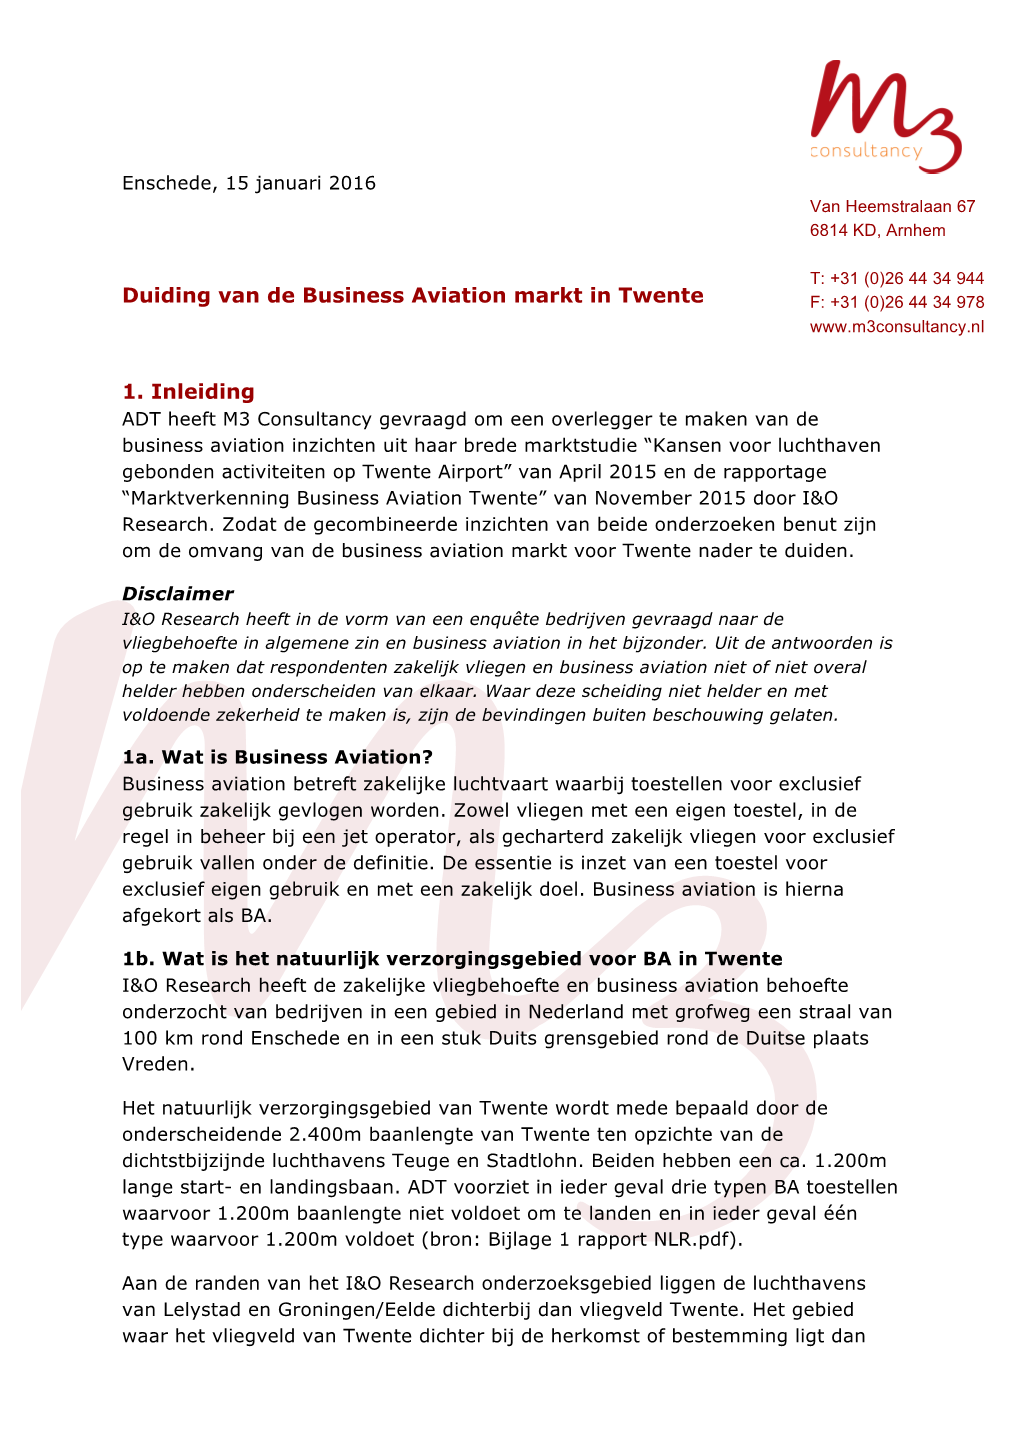 Duiding Van De Business Aviation Markt in Twente 1. Inleiding